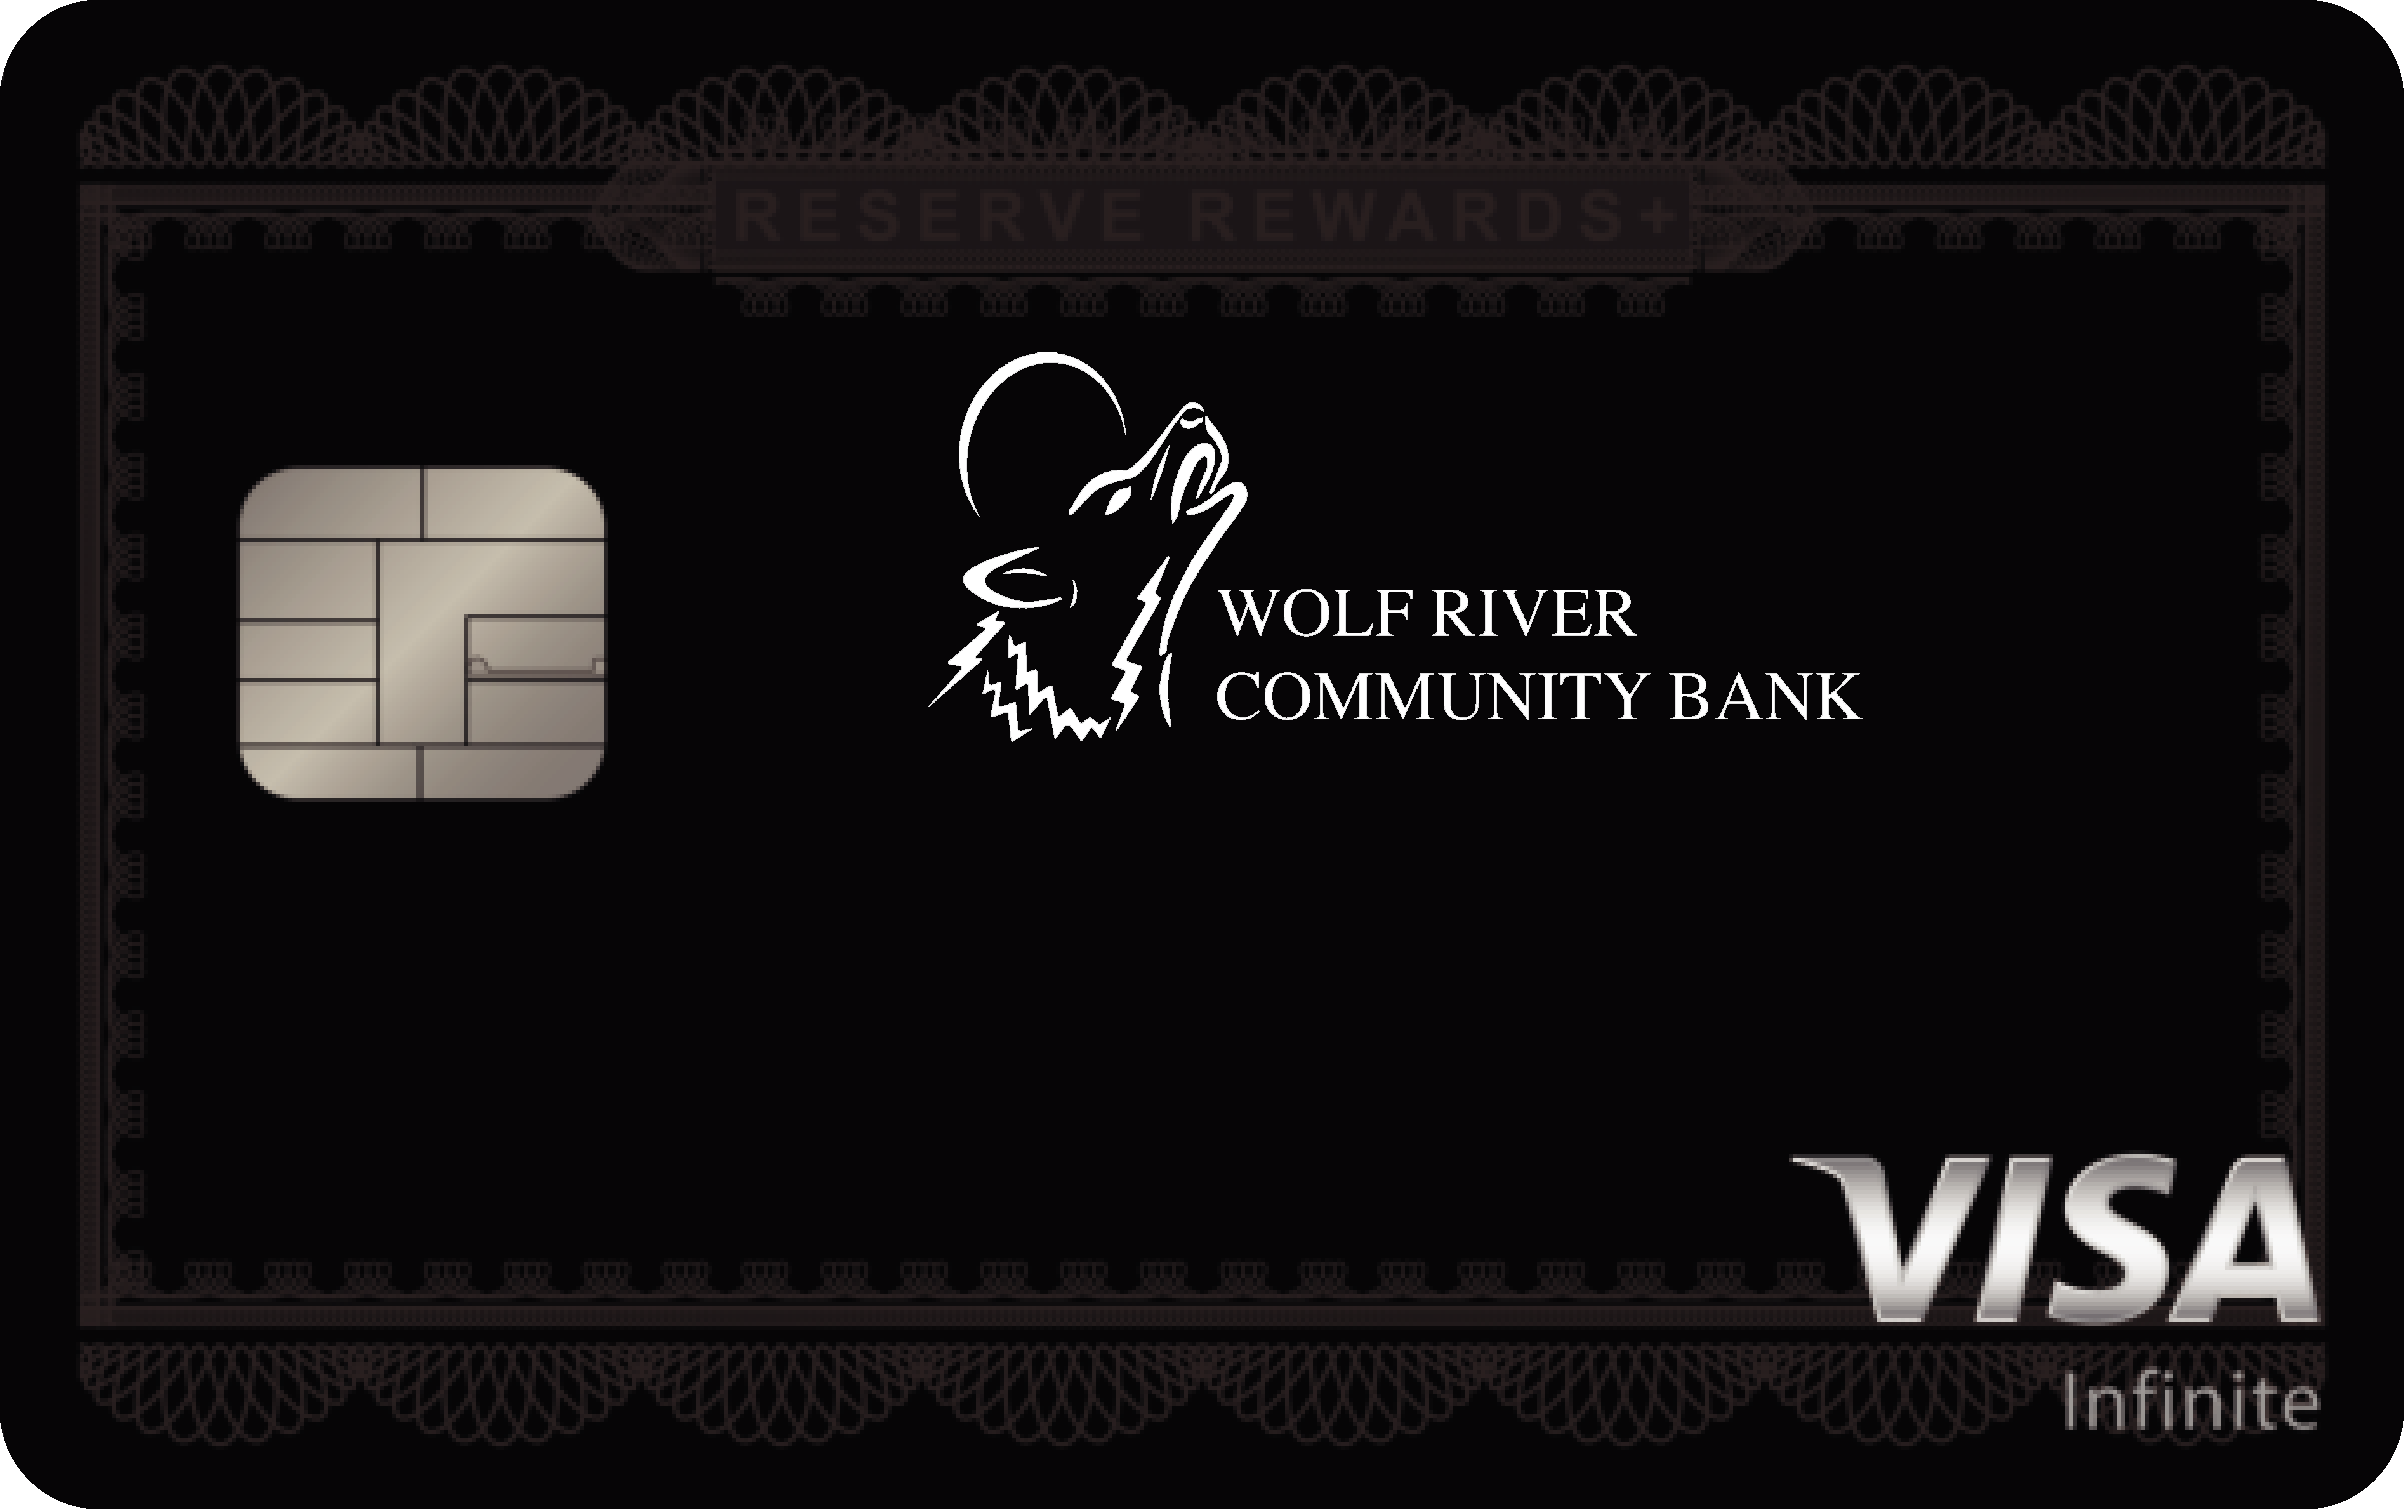 Wolf River Community Bank